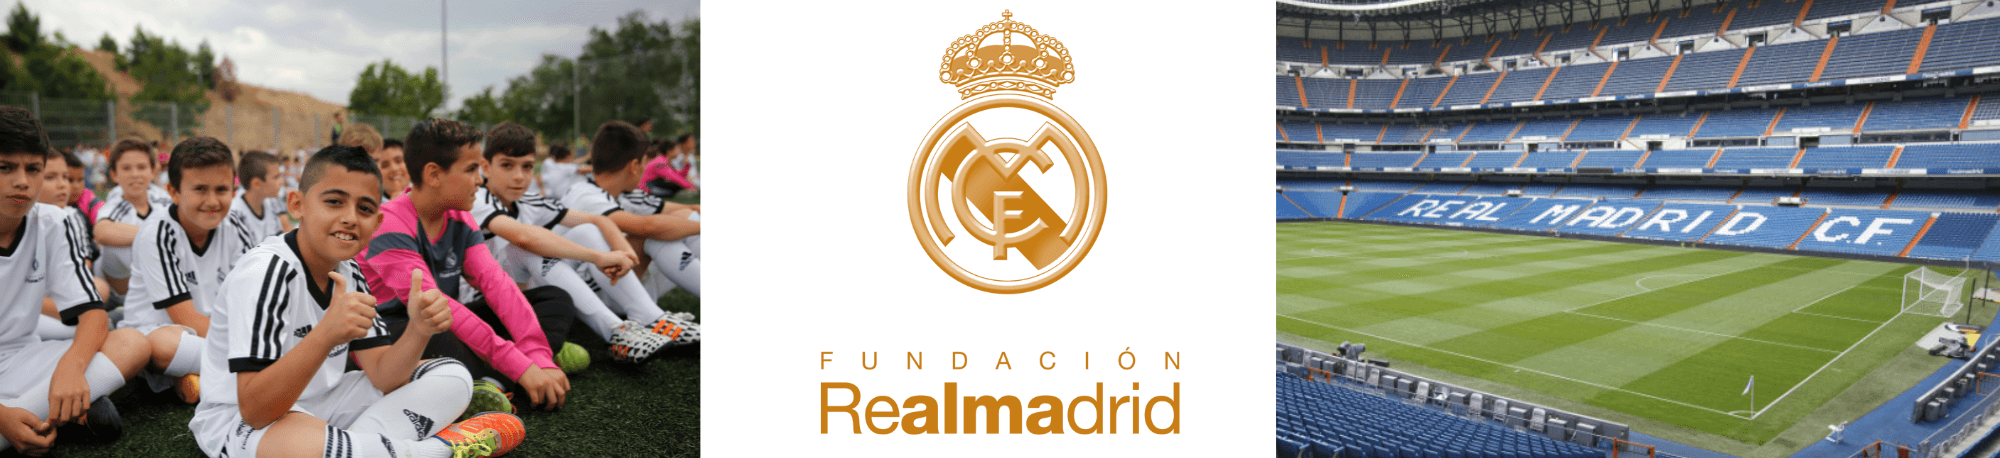 Real Madrid Foundation Program